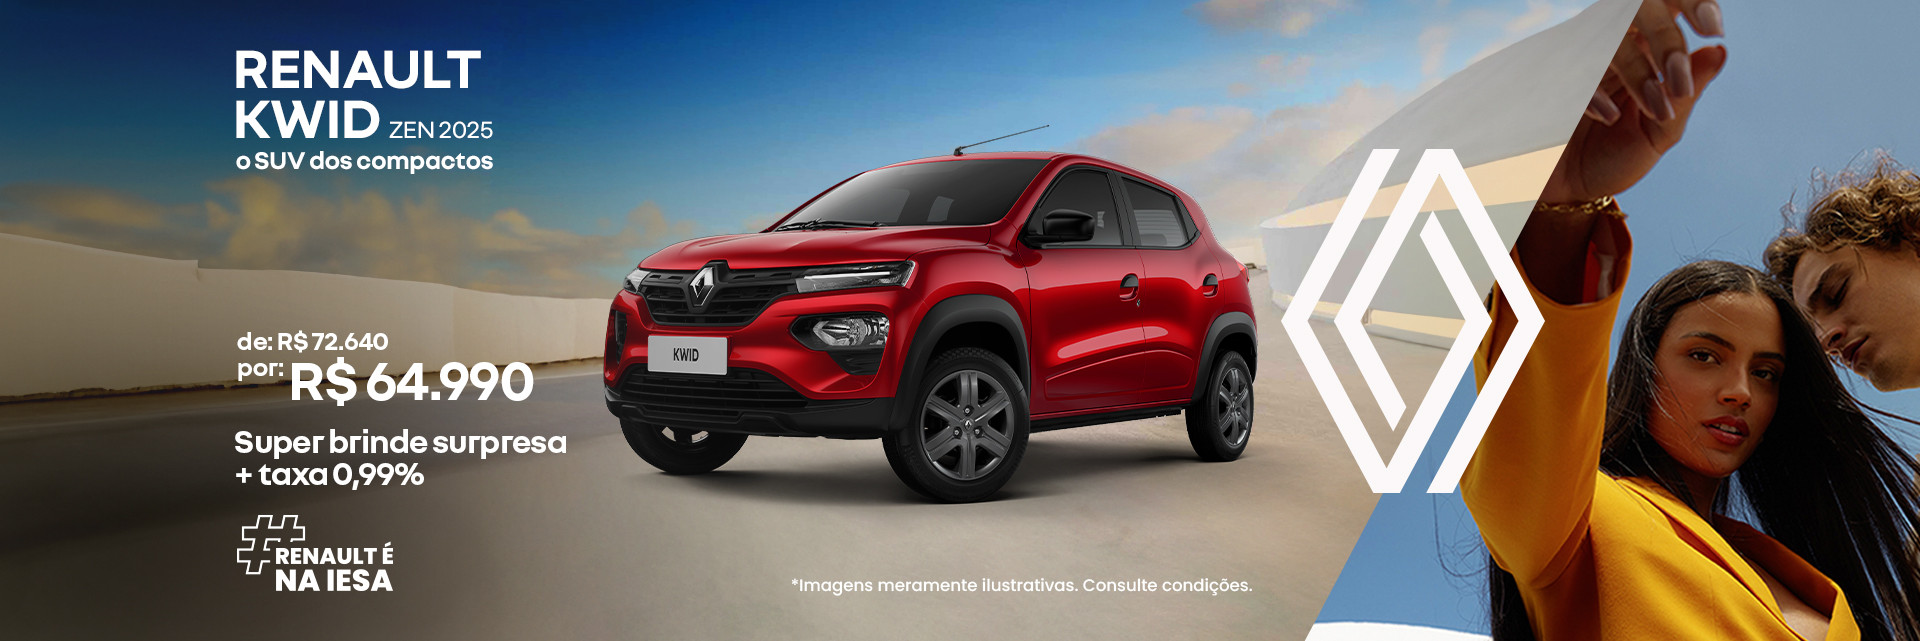 Oferta Renault Kwid: condição promocional